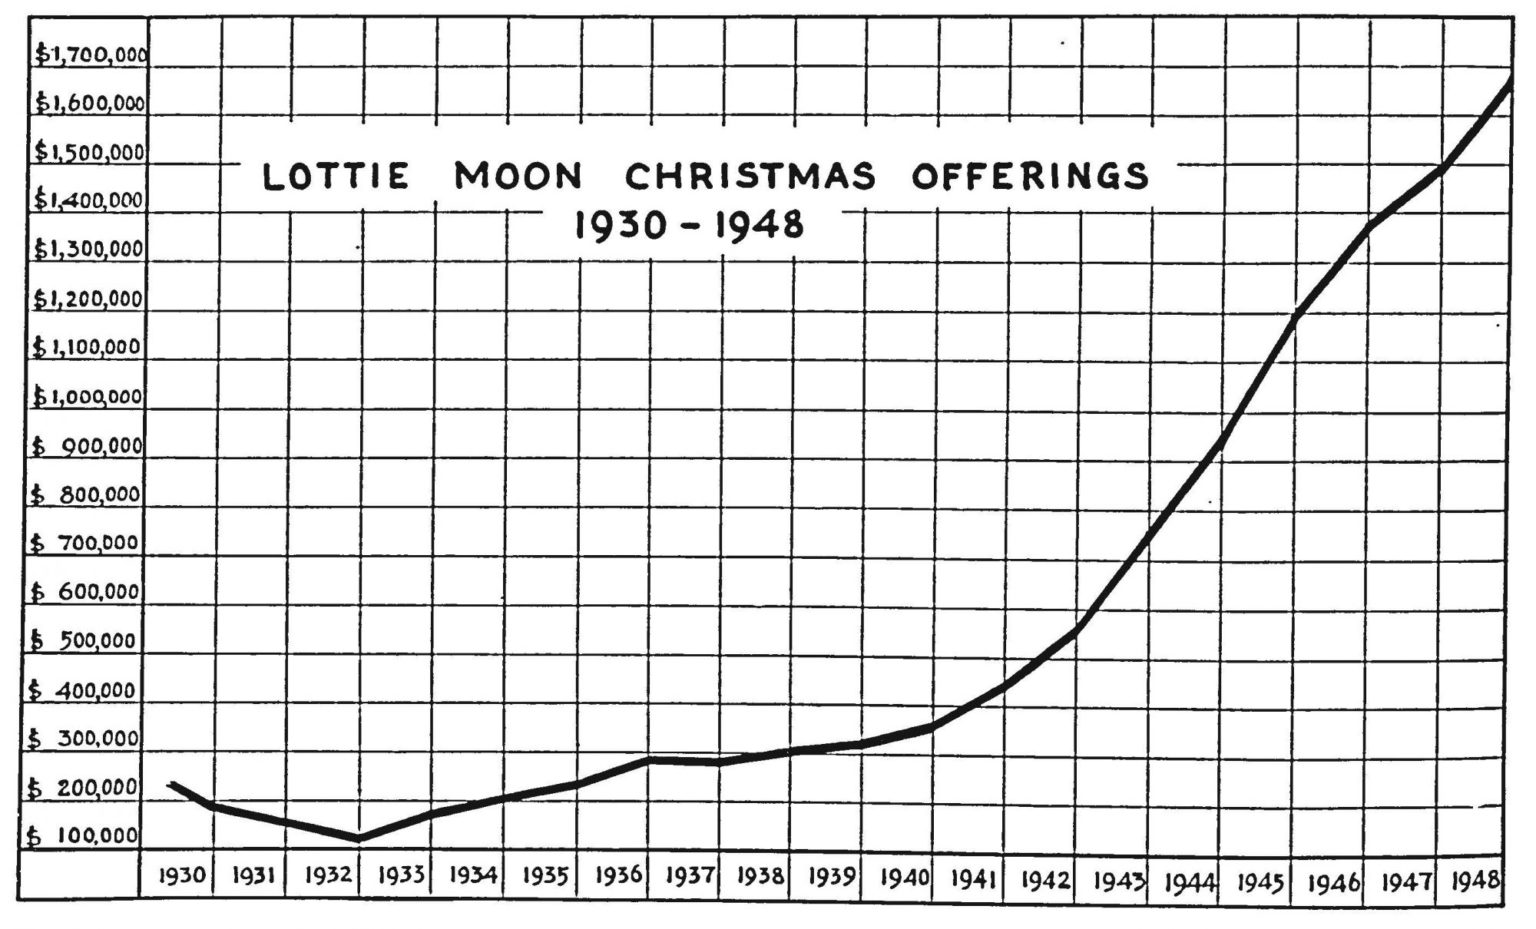 Lottie Moon Christmas Offering hits cumulative 5 billion IMB